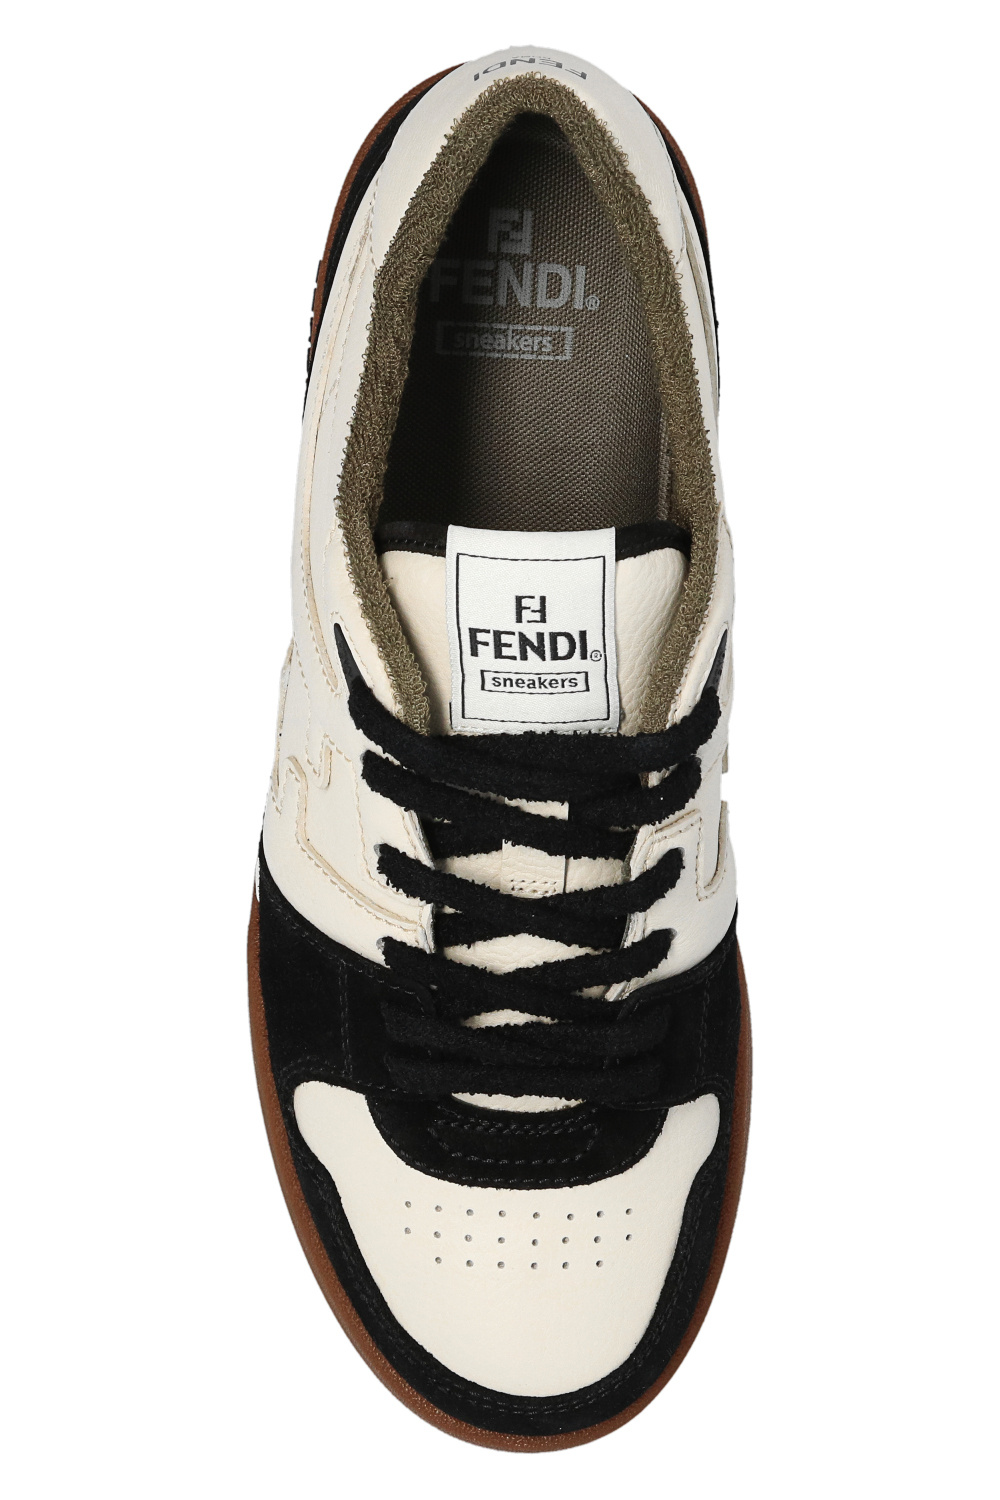 Men's Fendi Match sneakers, FENDI